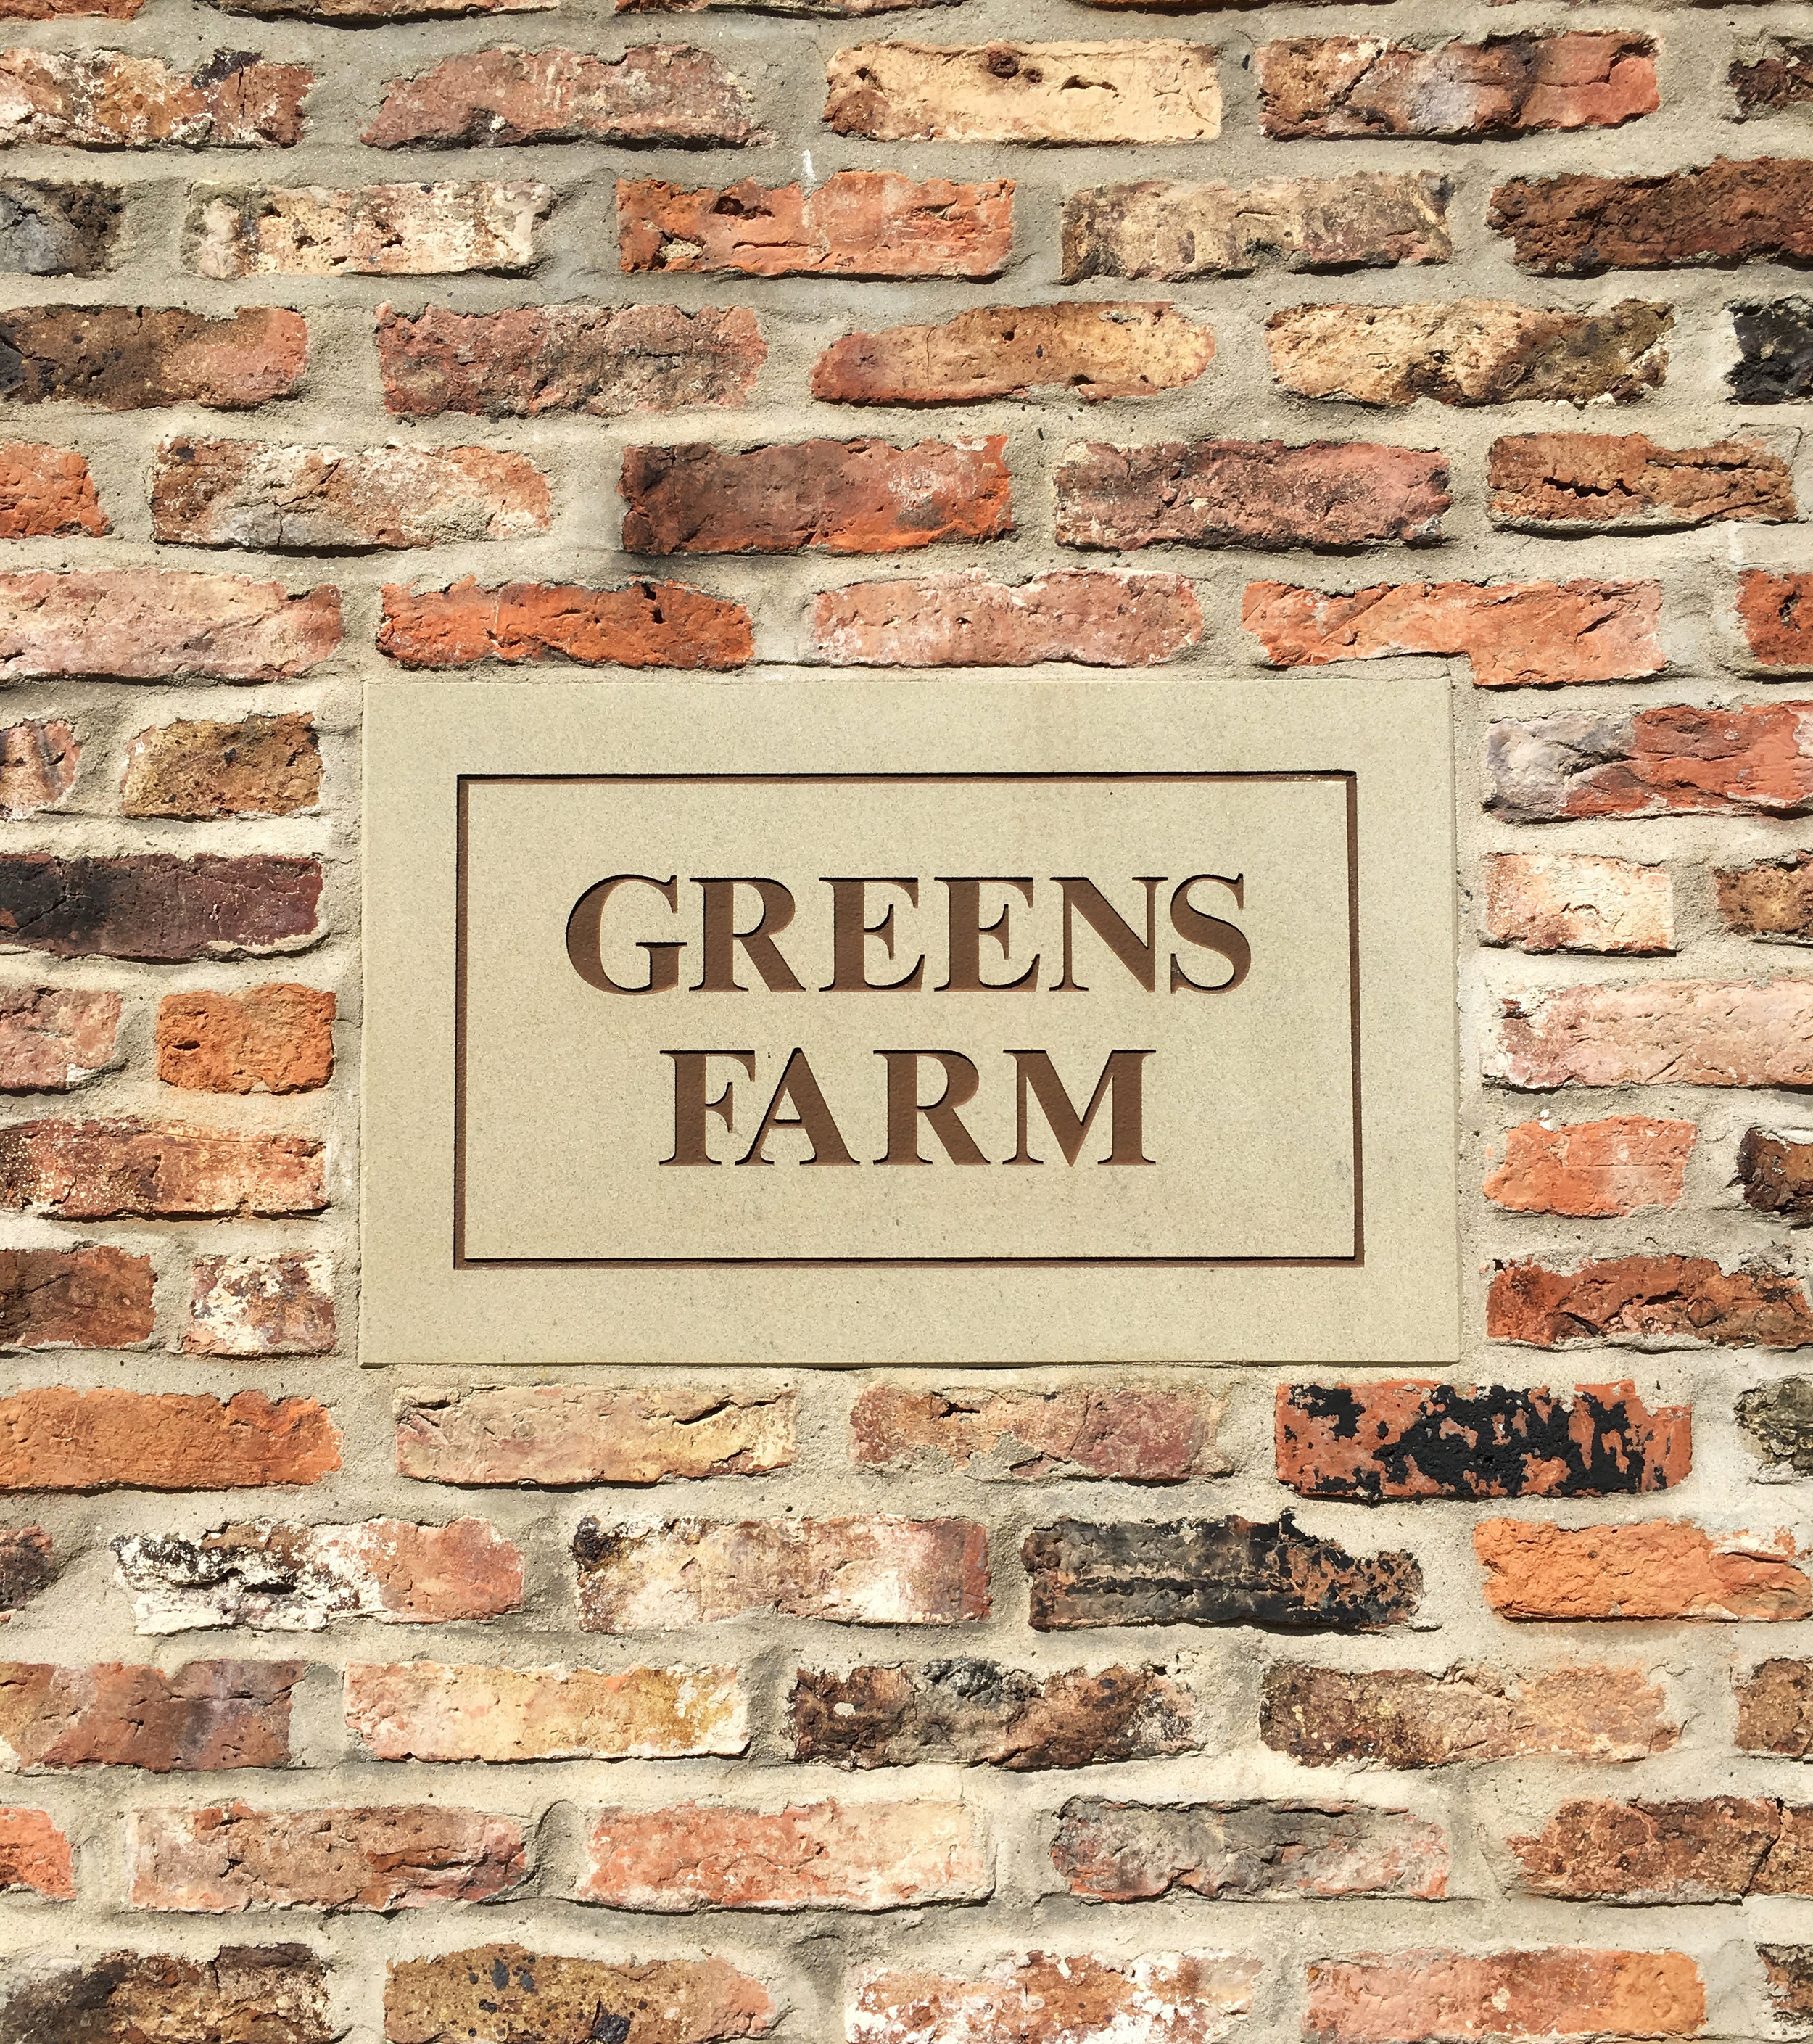 Greens Farm Name Detail - Samuel Kendall Associates - East Yorkshire Architects.jpg